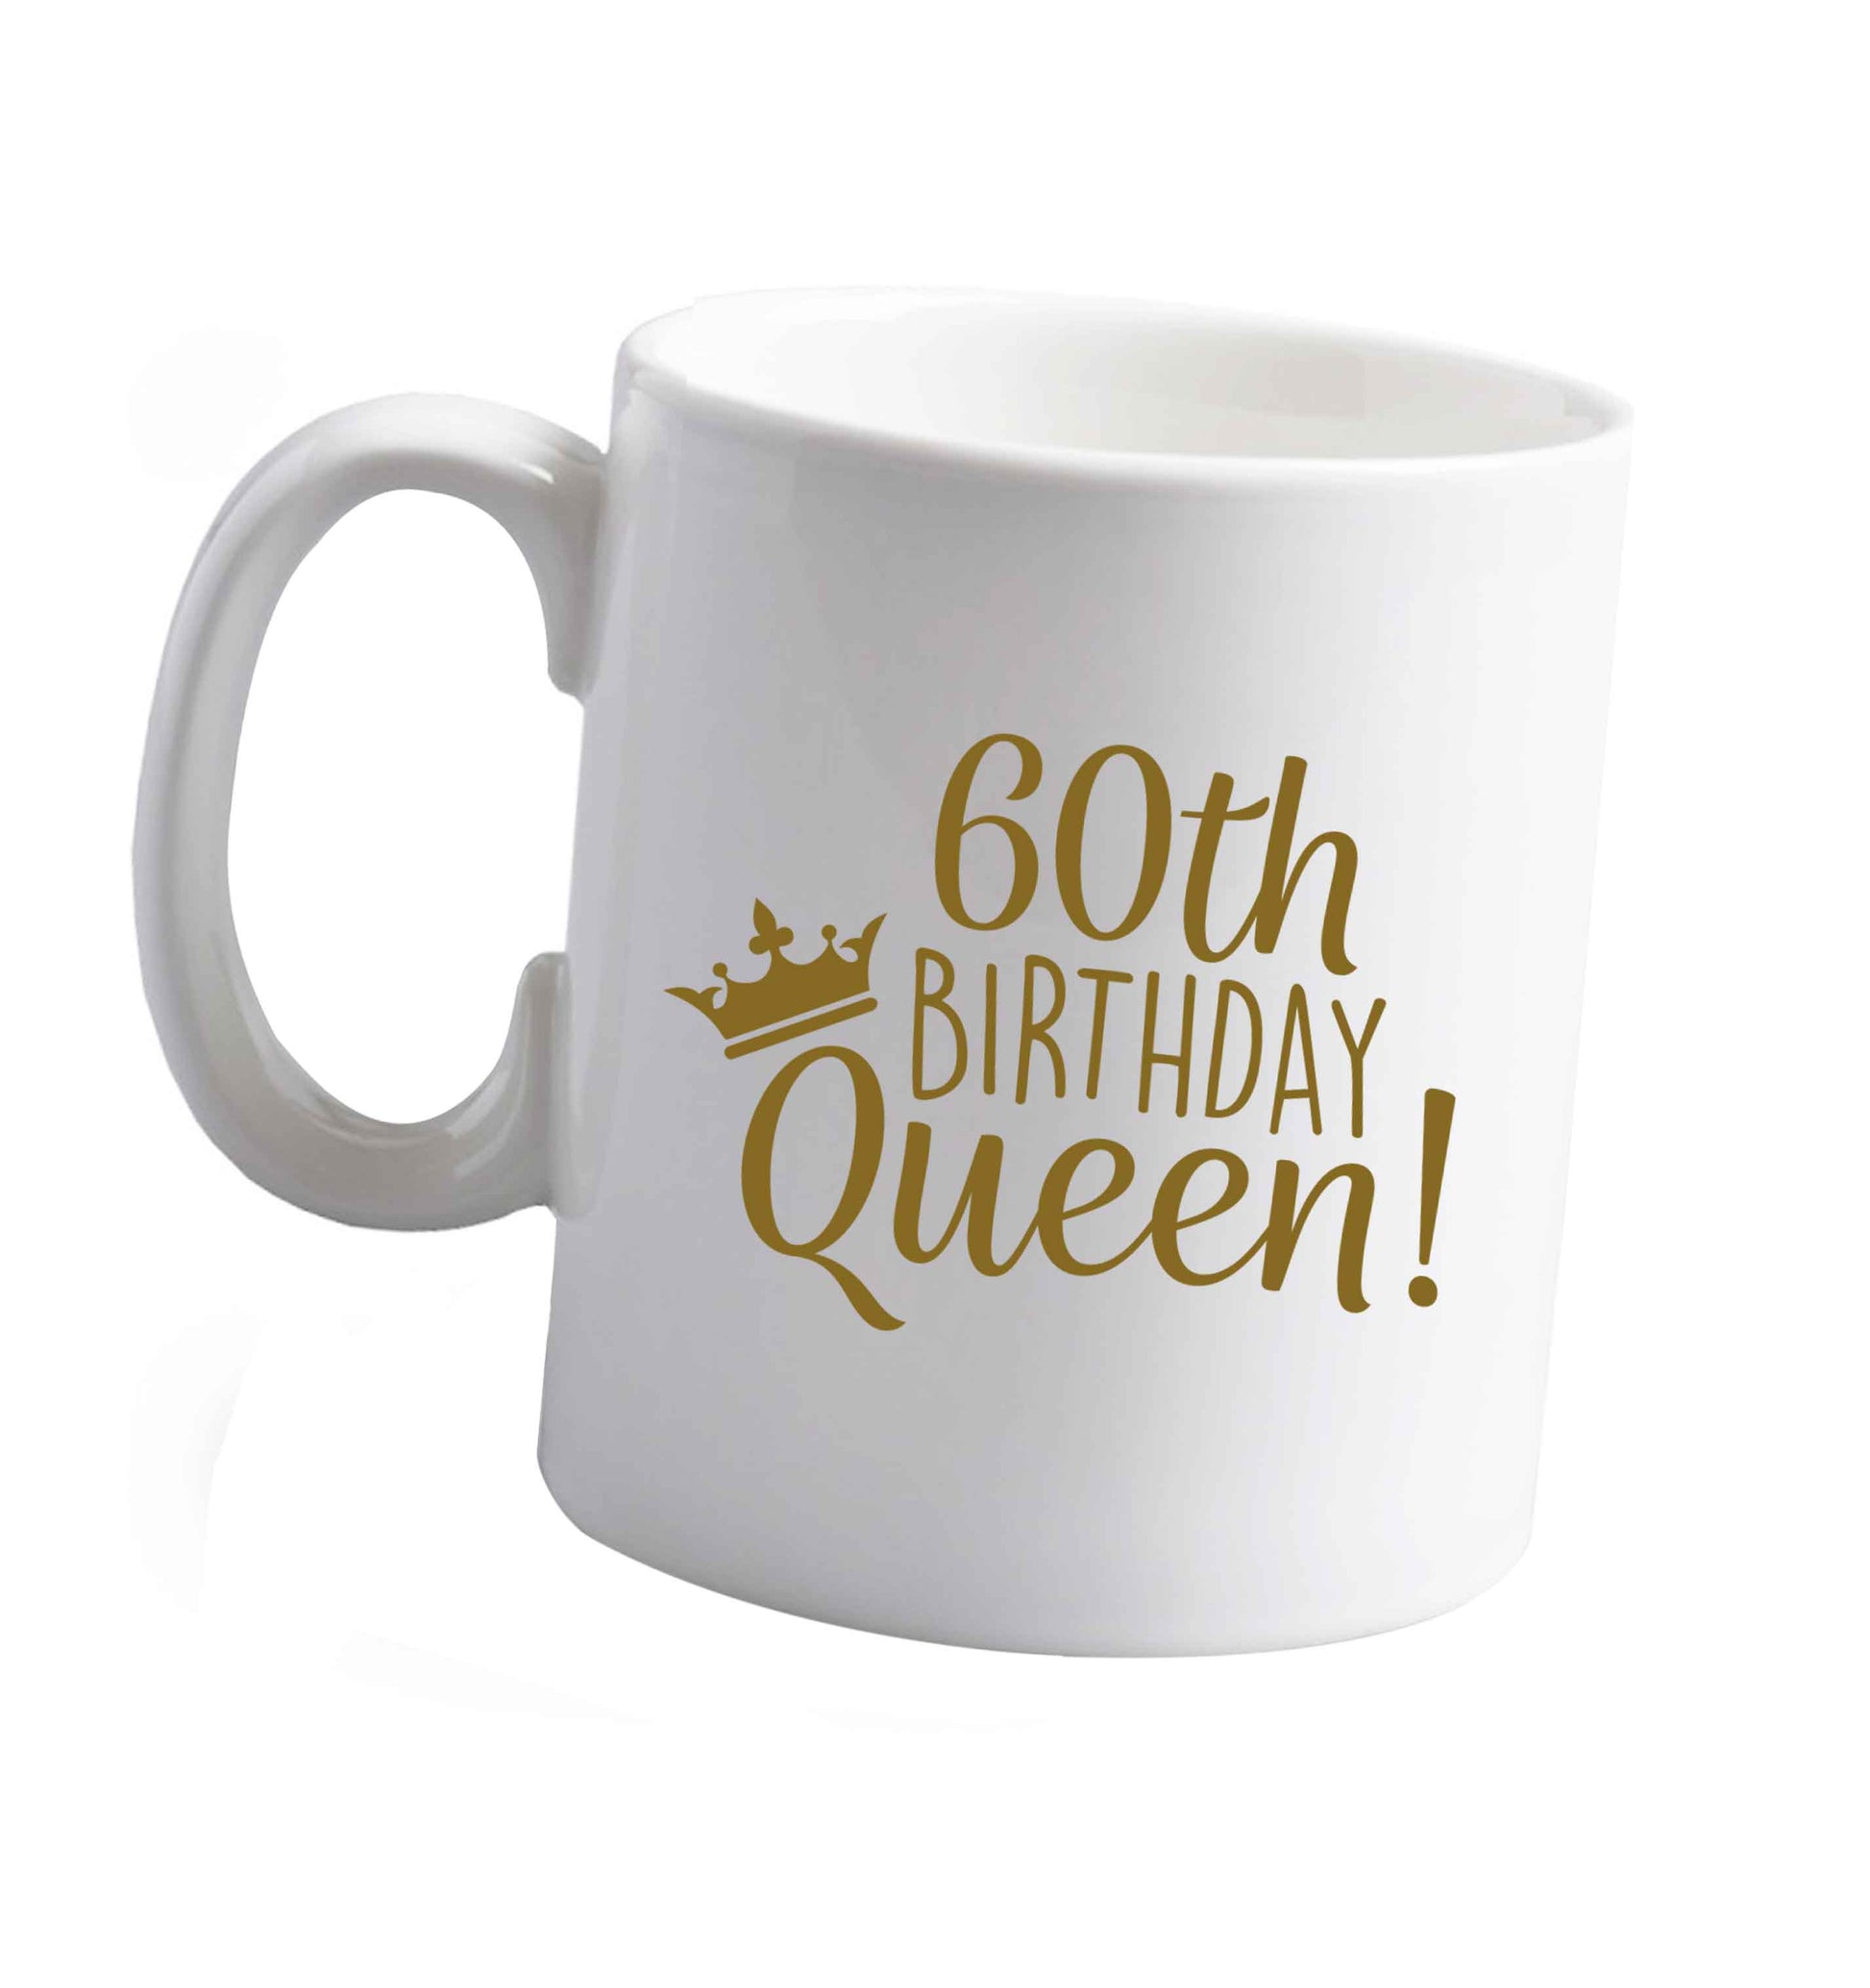 10 oz 60th birthday Queen ceramic mug right handed